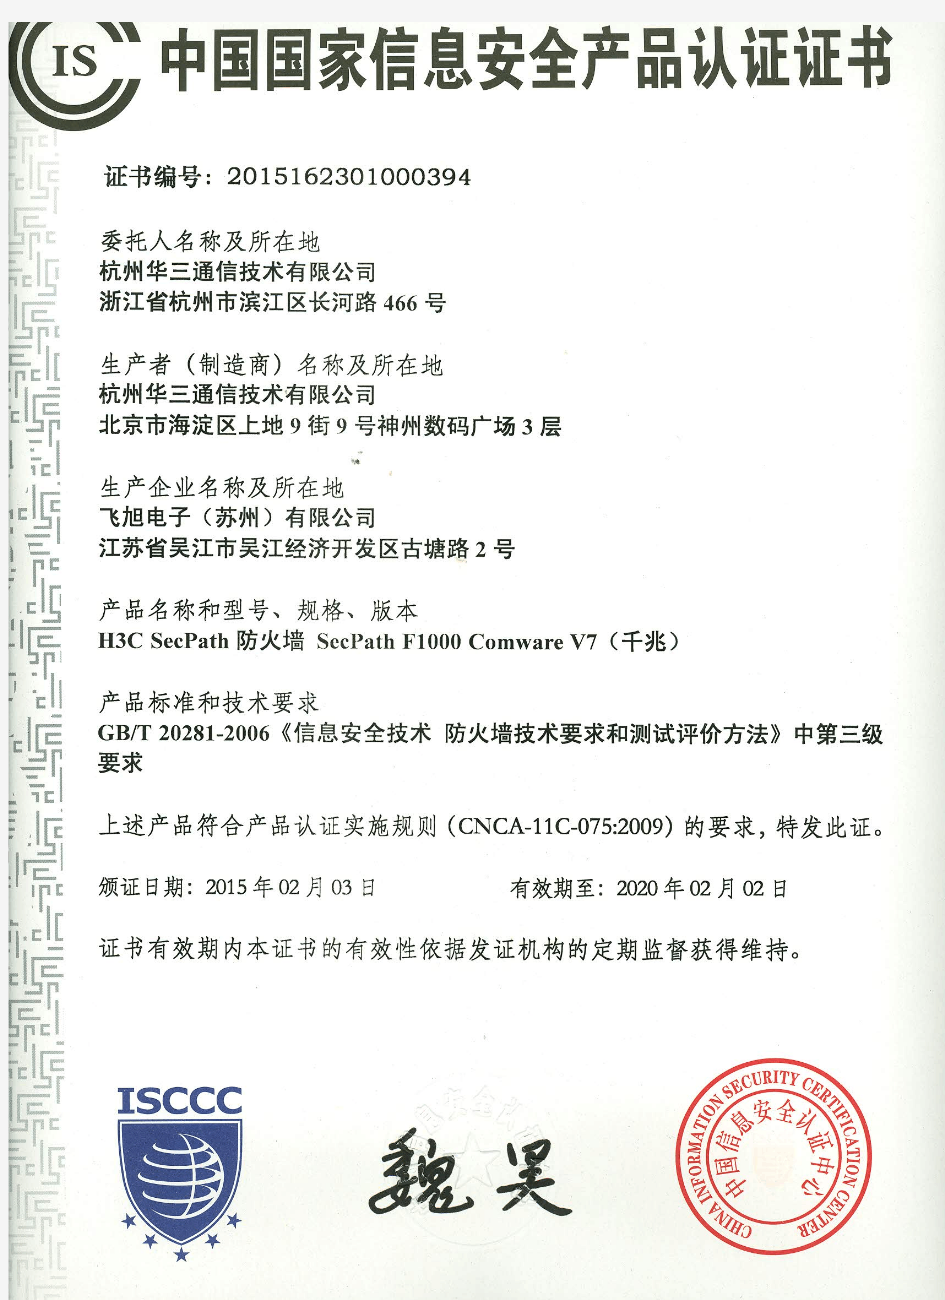 H3C Secpath 防火墙 SecPath F1000 Comware V7(千兆)中国国家信息安全产品认证证书(有效期至2020年2月)